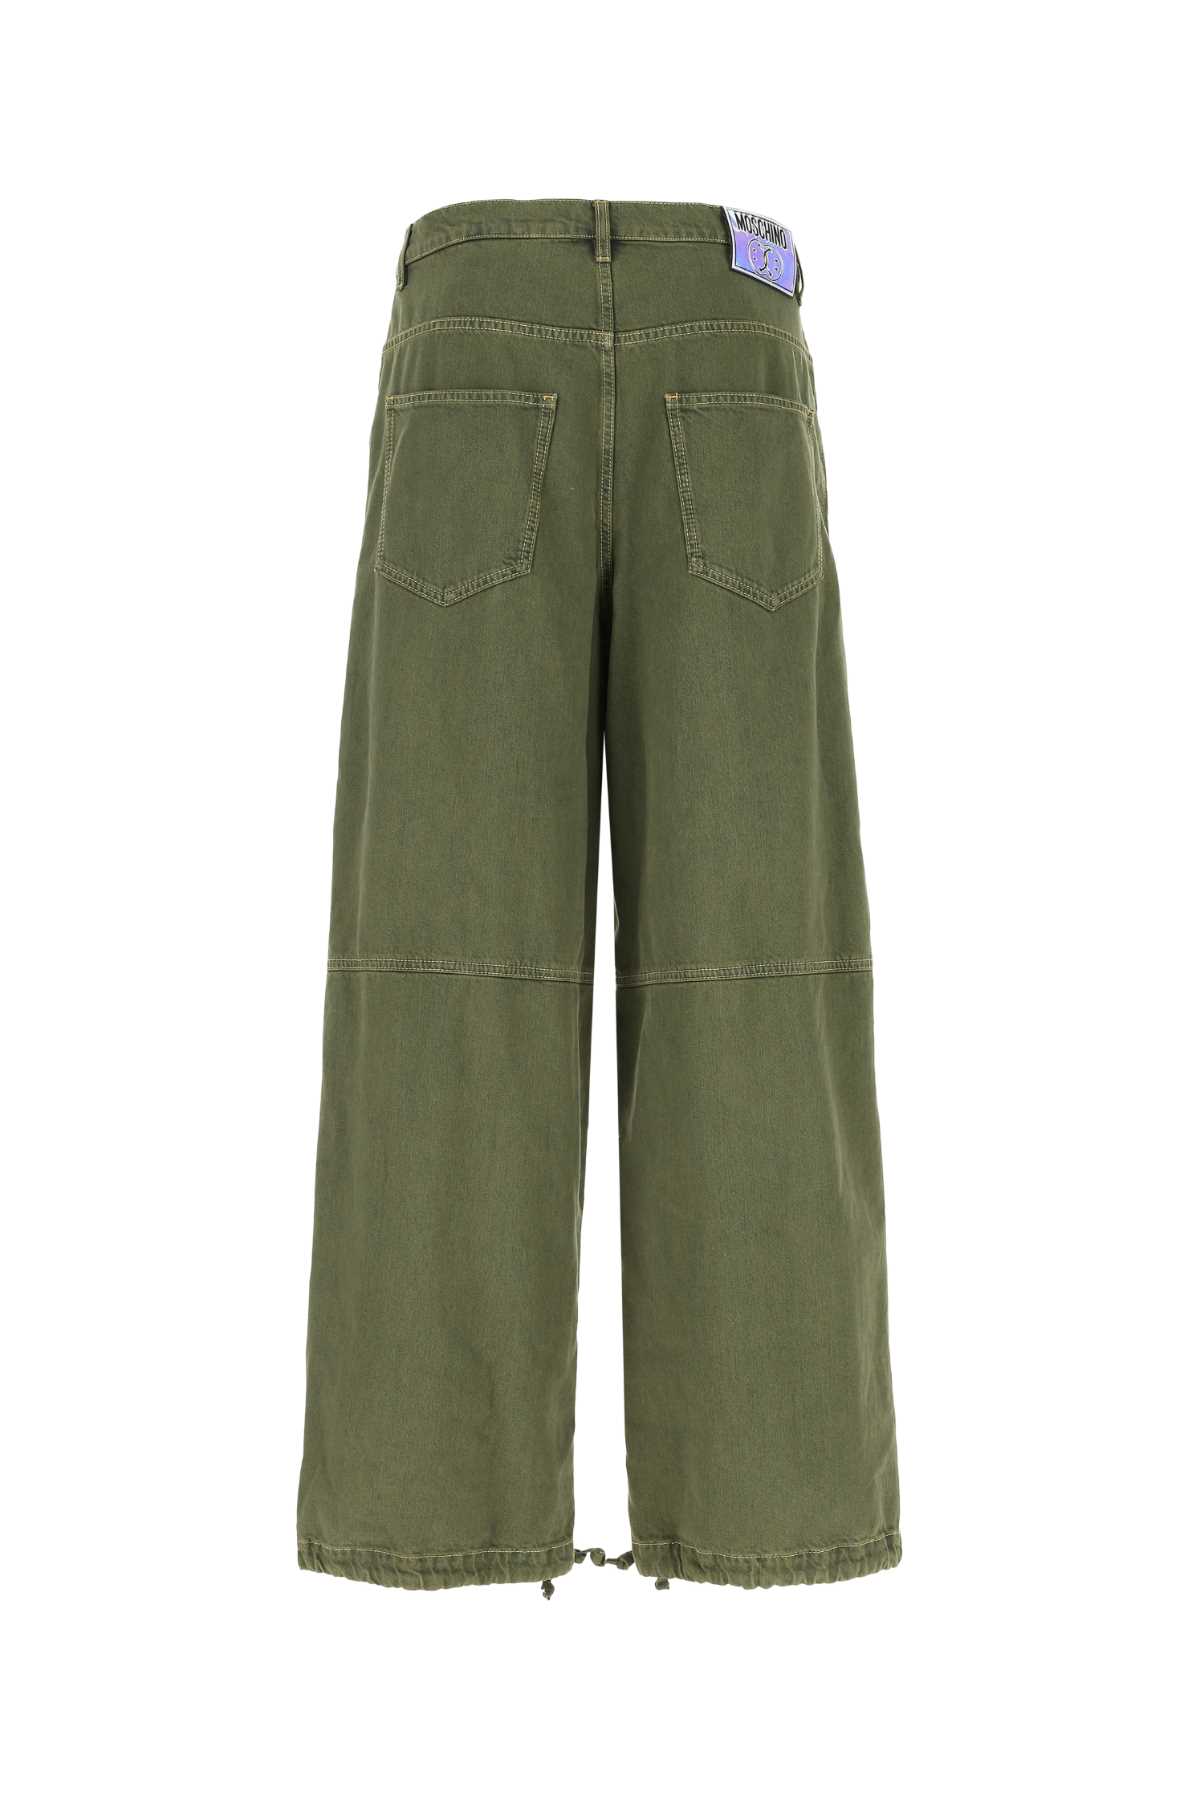 Moschino Army Green Denim Cargo Trouser In 0443